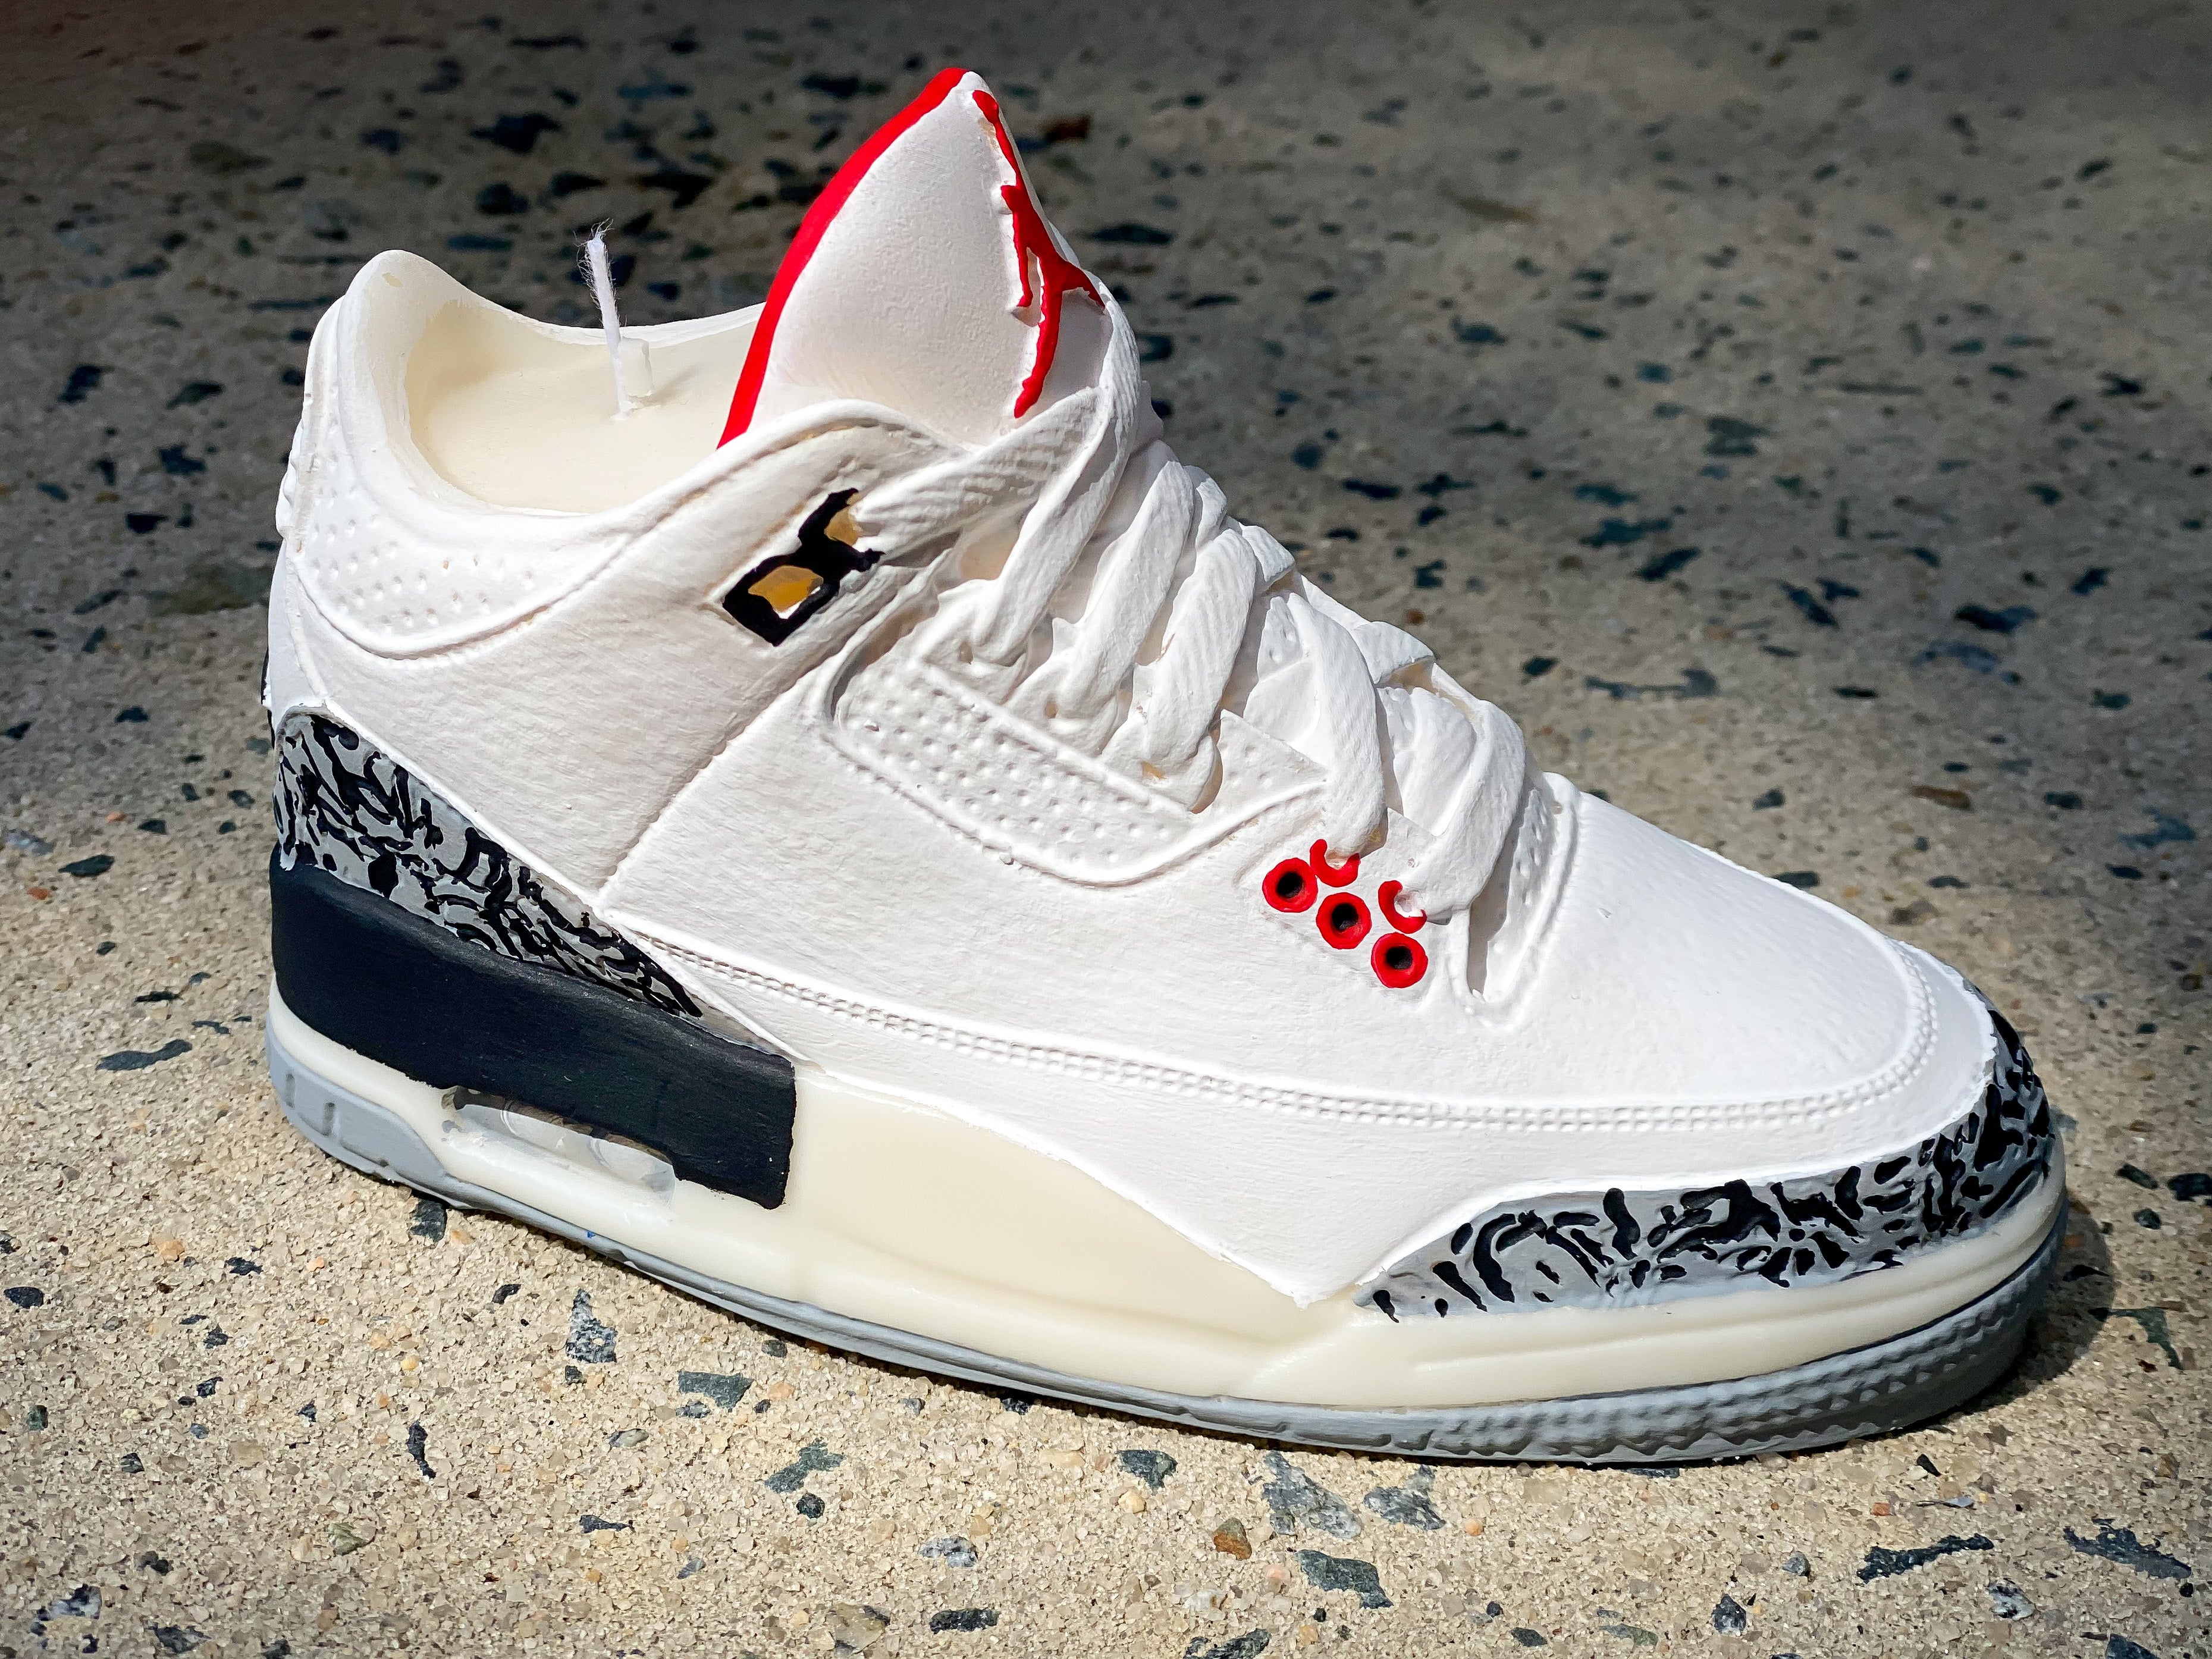 Sneaker Candle-Retro White Cement 3 | Nike Air Jordan 3 Sneaker